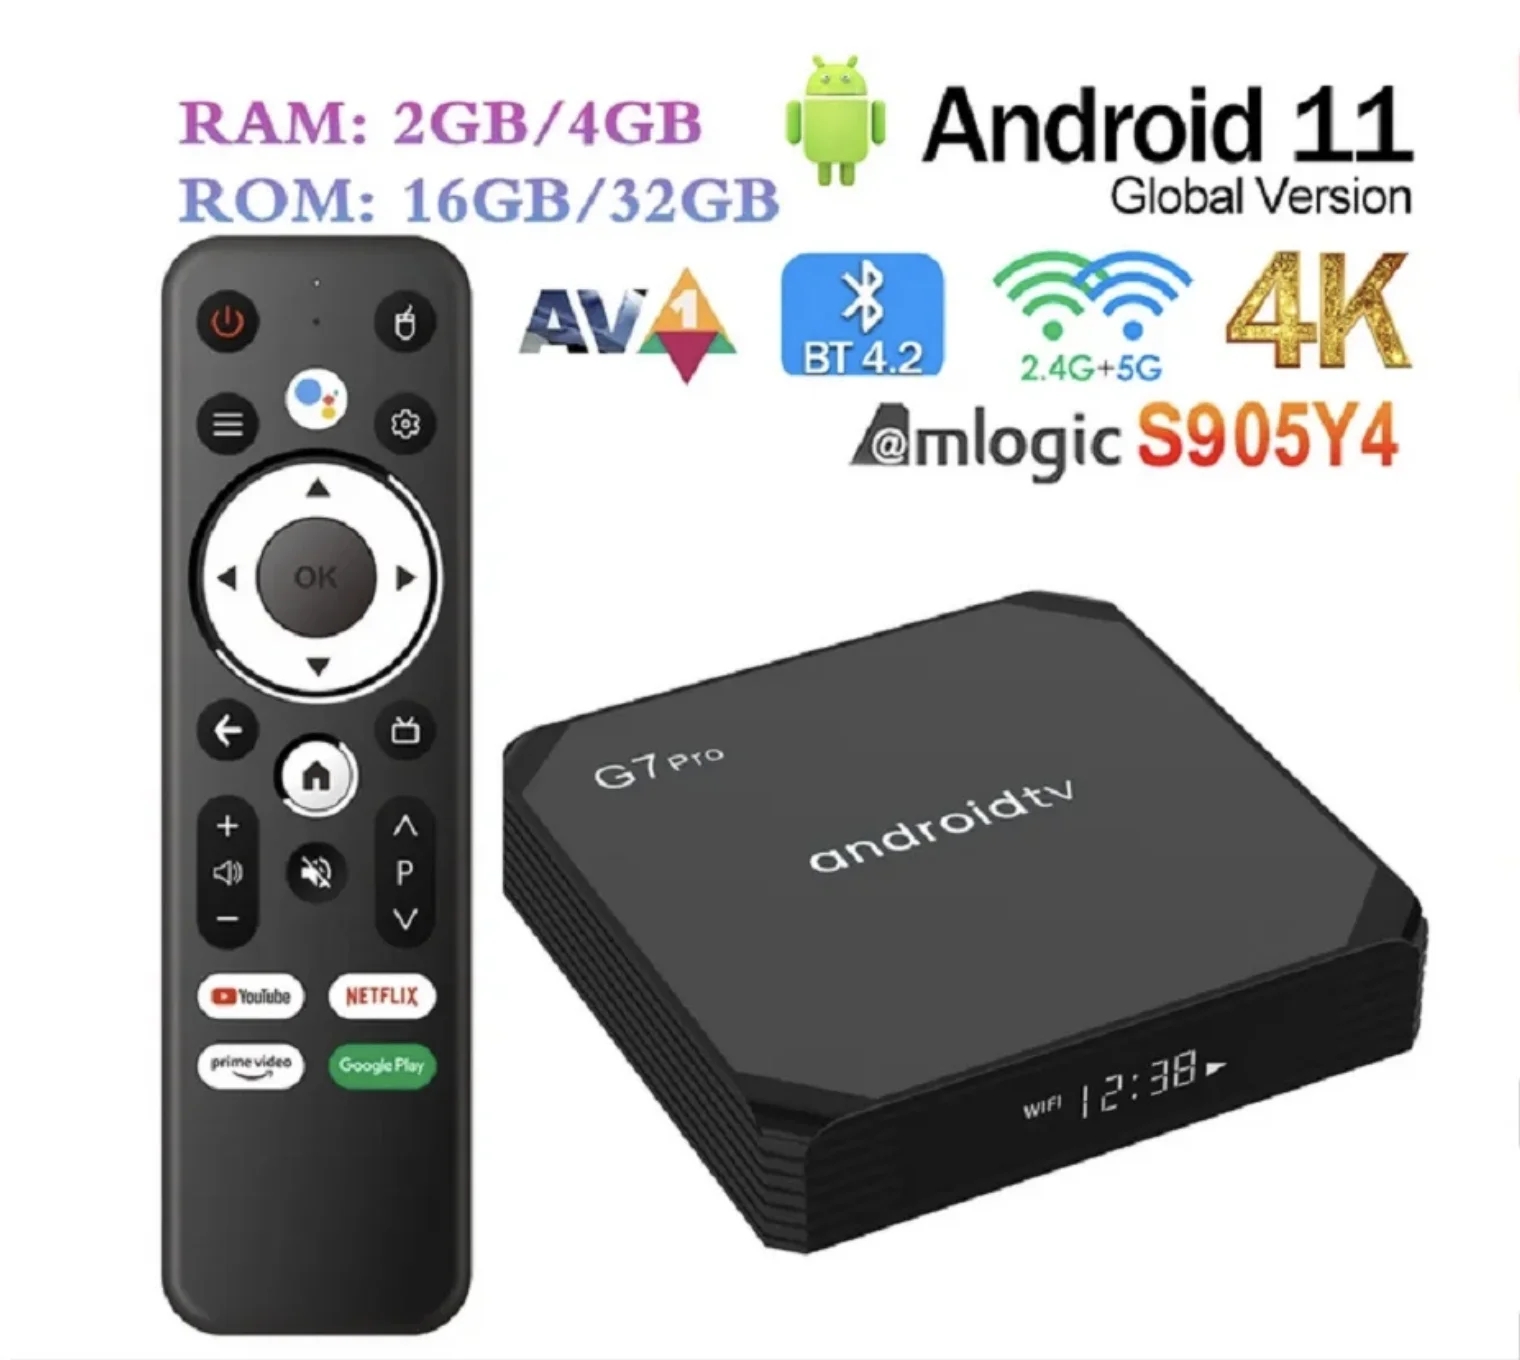 G7 PRO SMART ATV ANDROID 11 TV BOX AMLOGIC S905Y4 2GB 16GB / 4GB 32GB BT AVI 2.4G / 5G WIFI 4K HDRメディアプレーヤーセットトップボックス